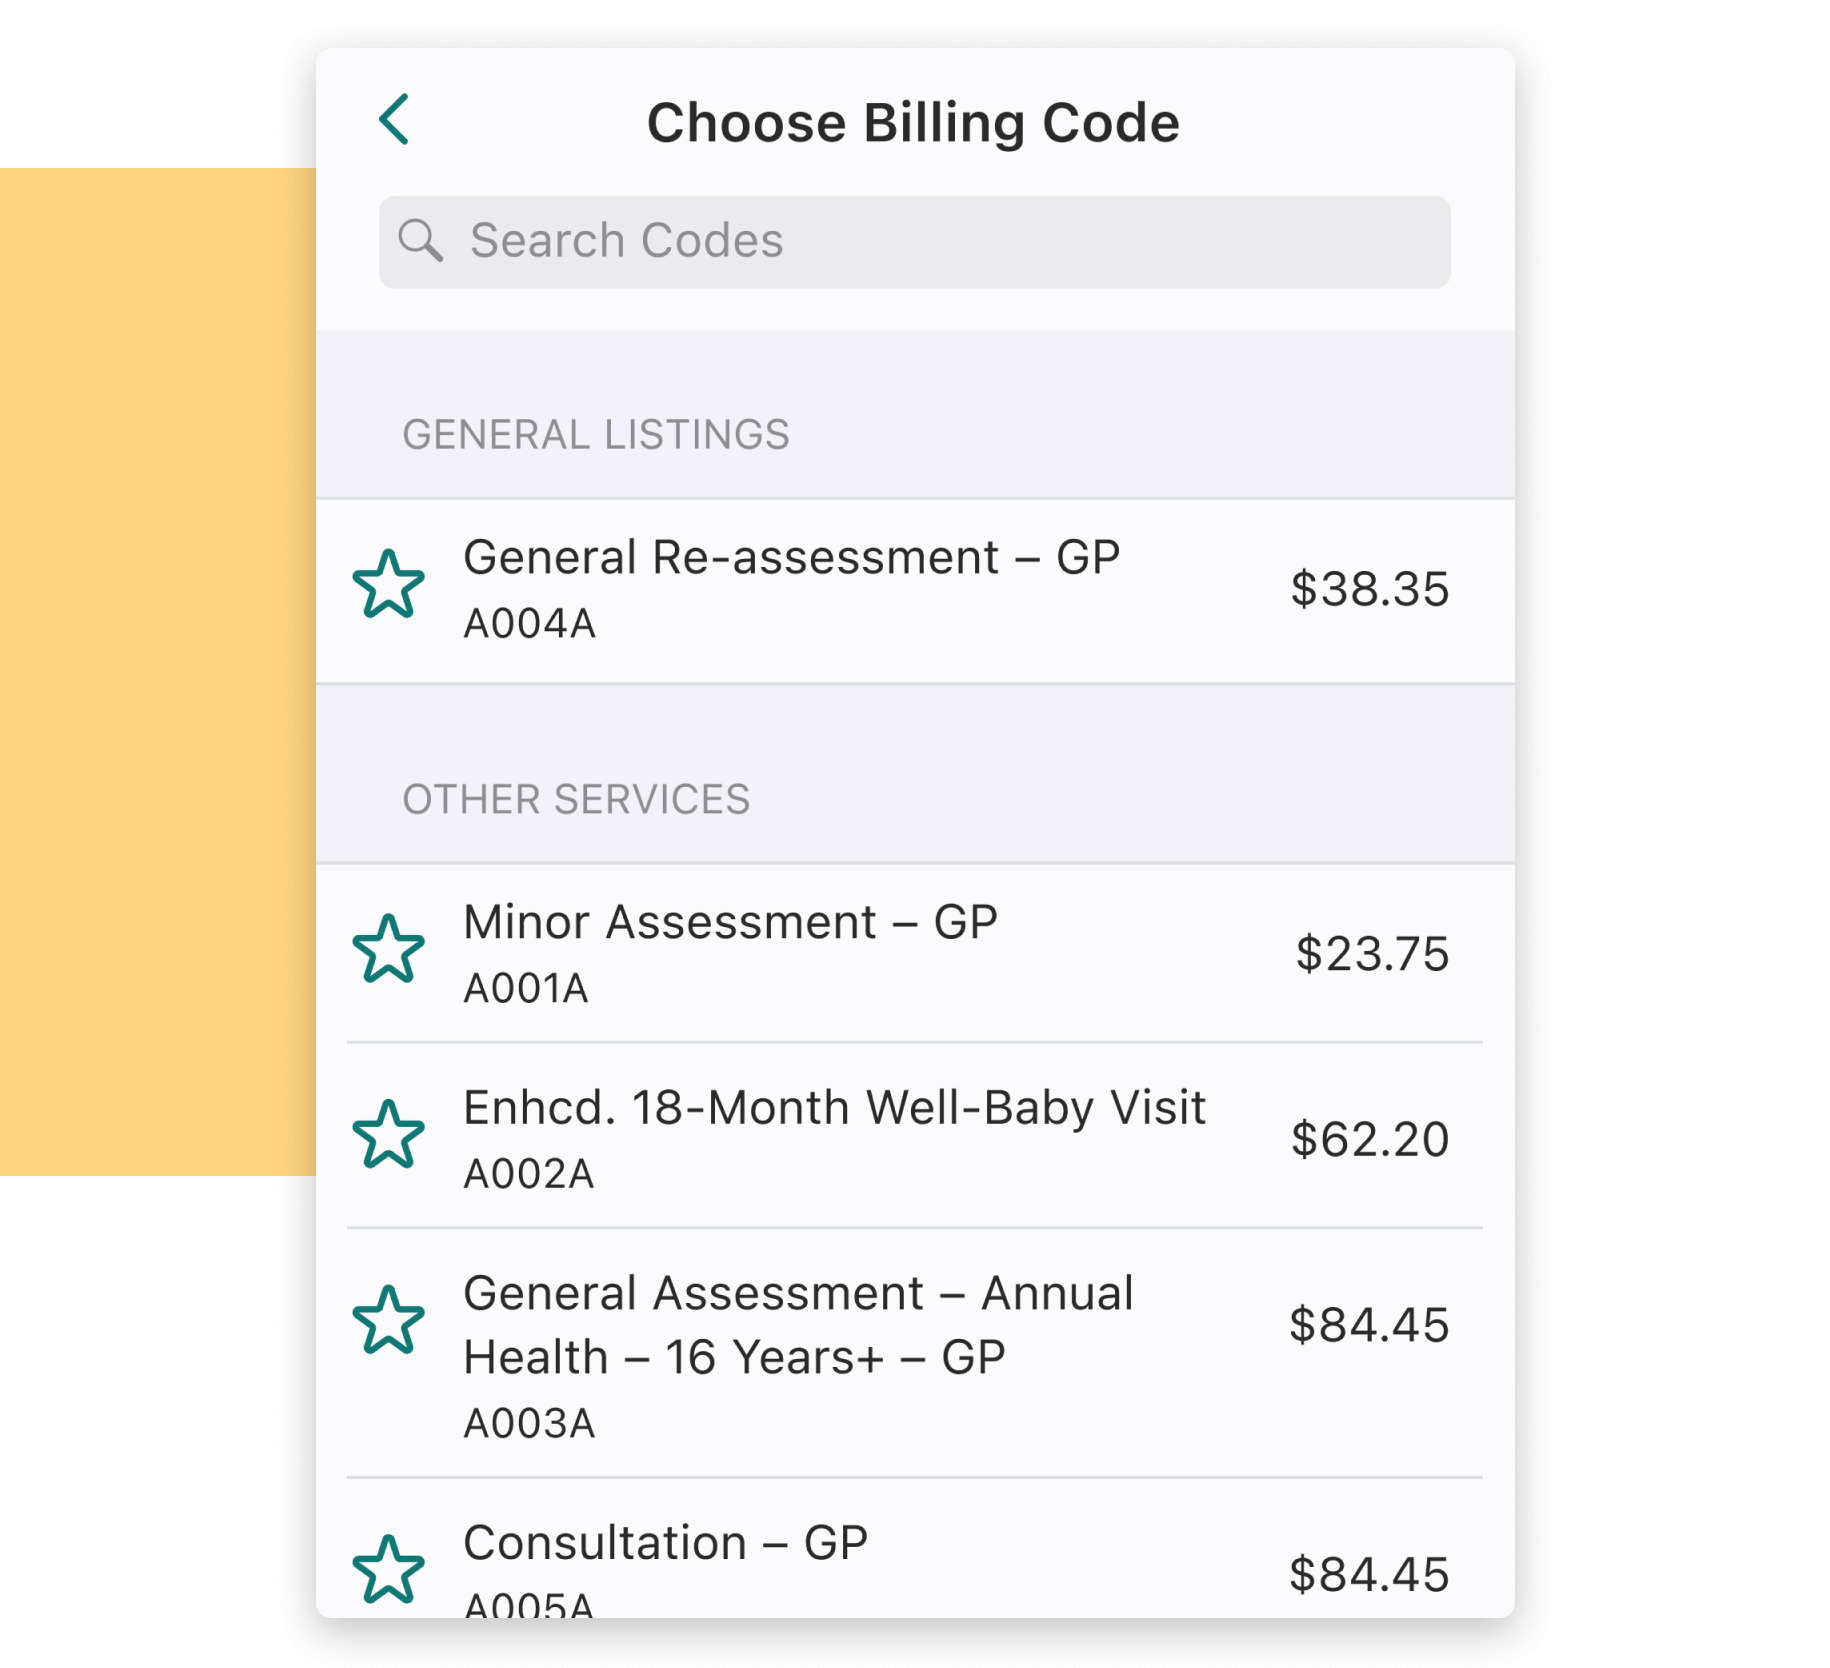 Choosing a billing code in the Dr. Bill mobile app.